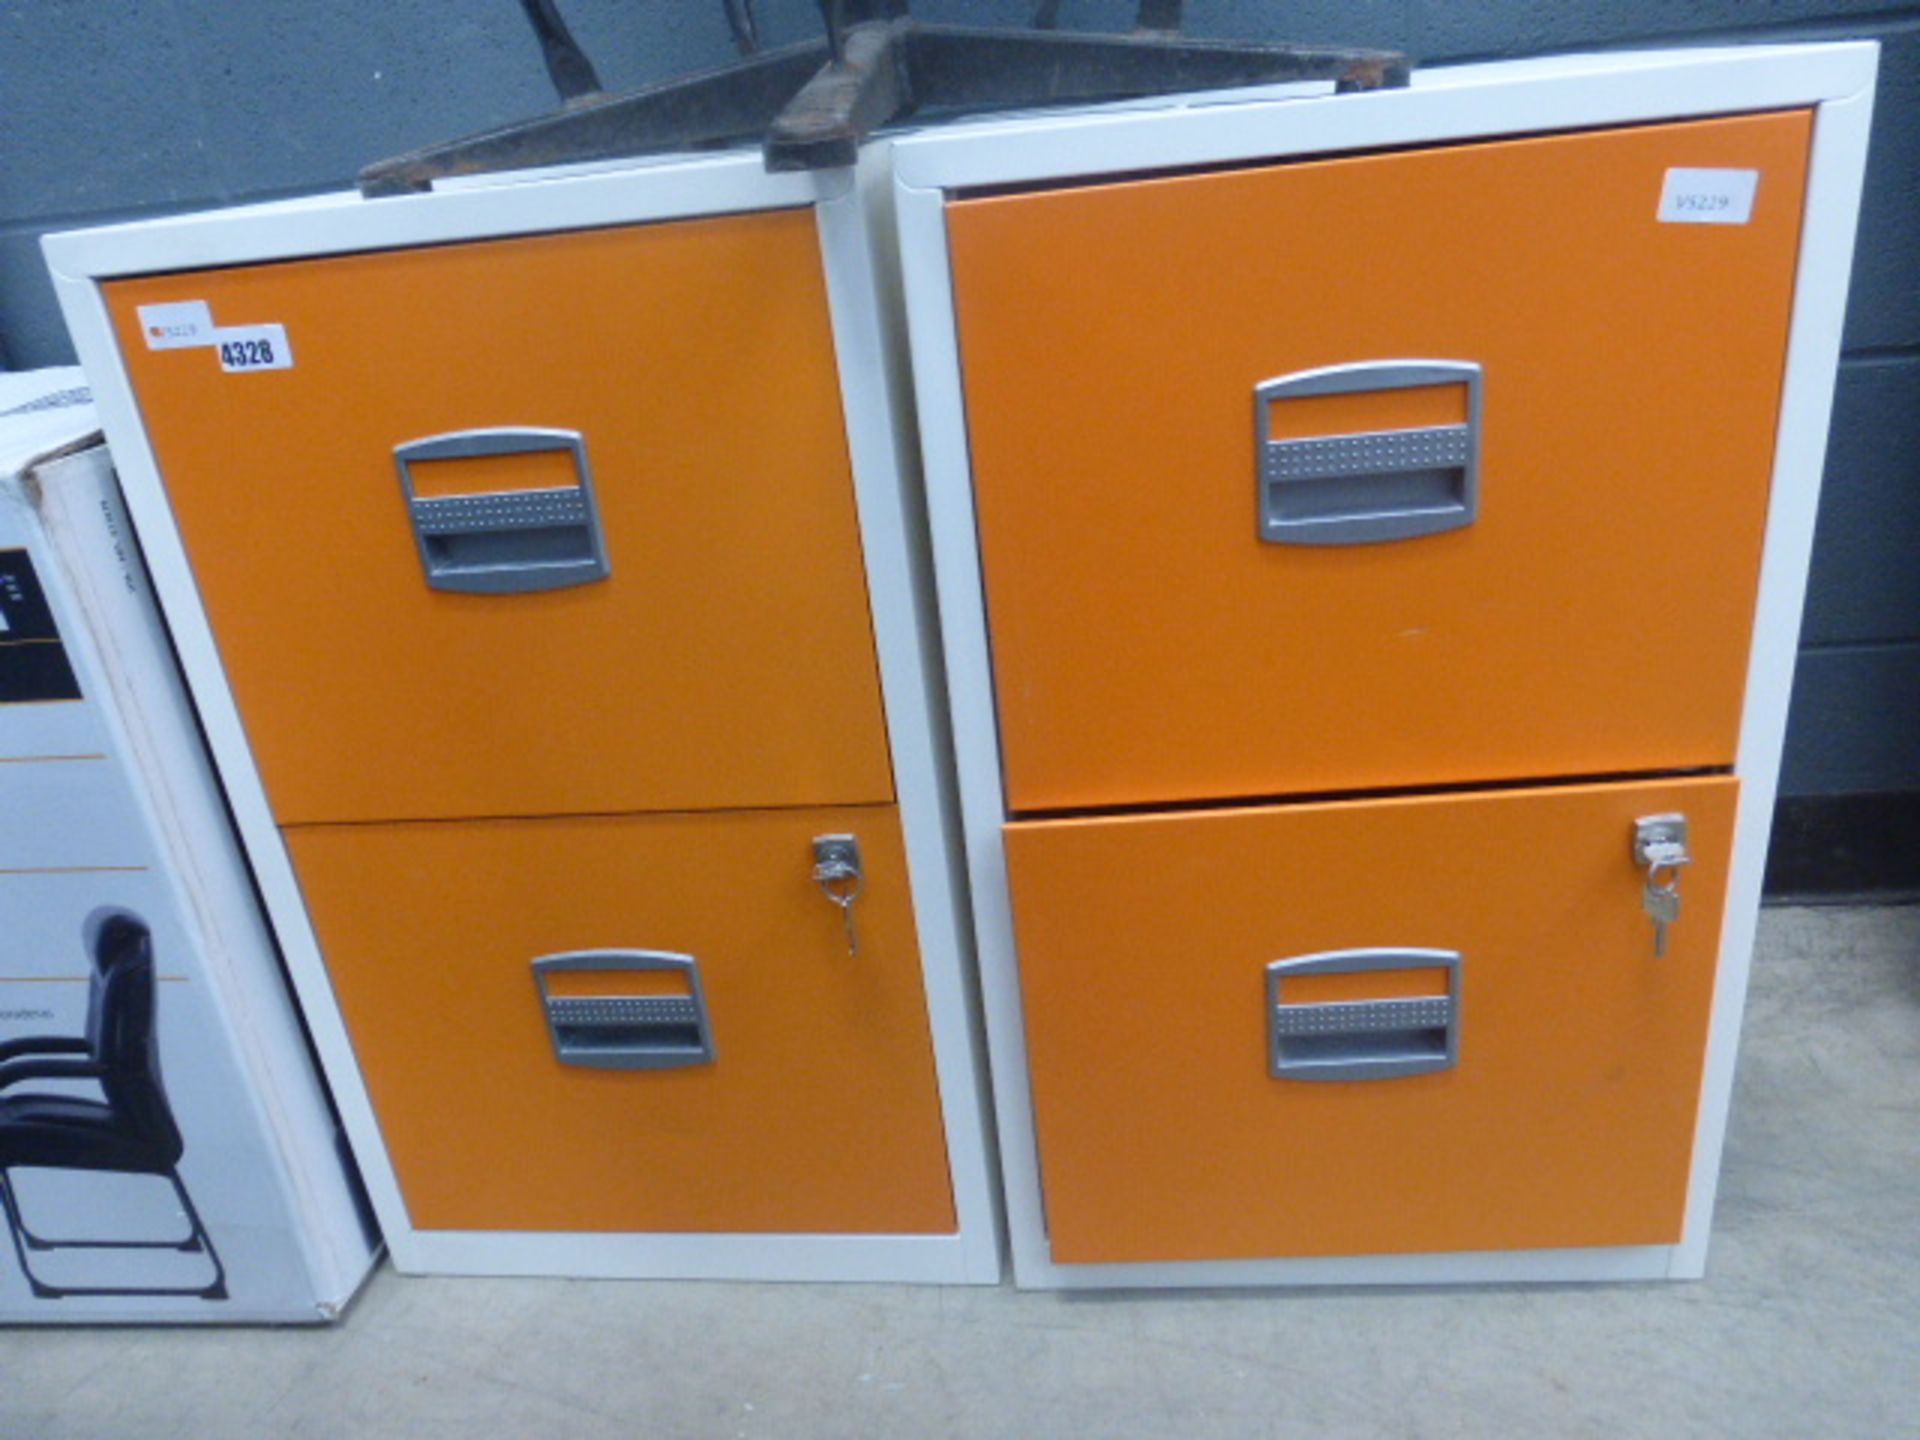 2 orange and white drawer units